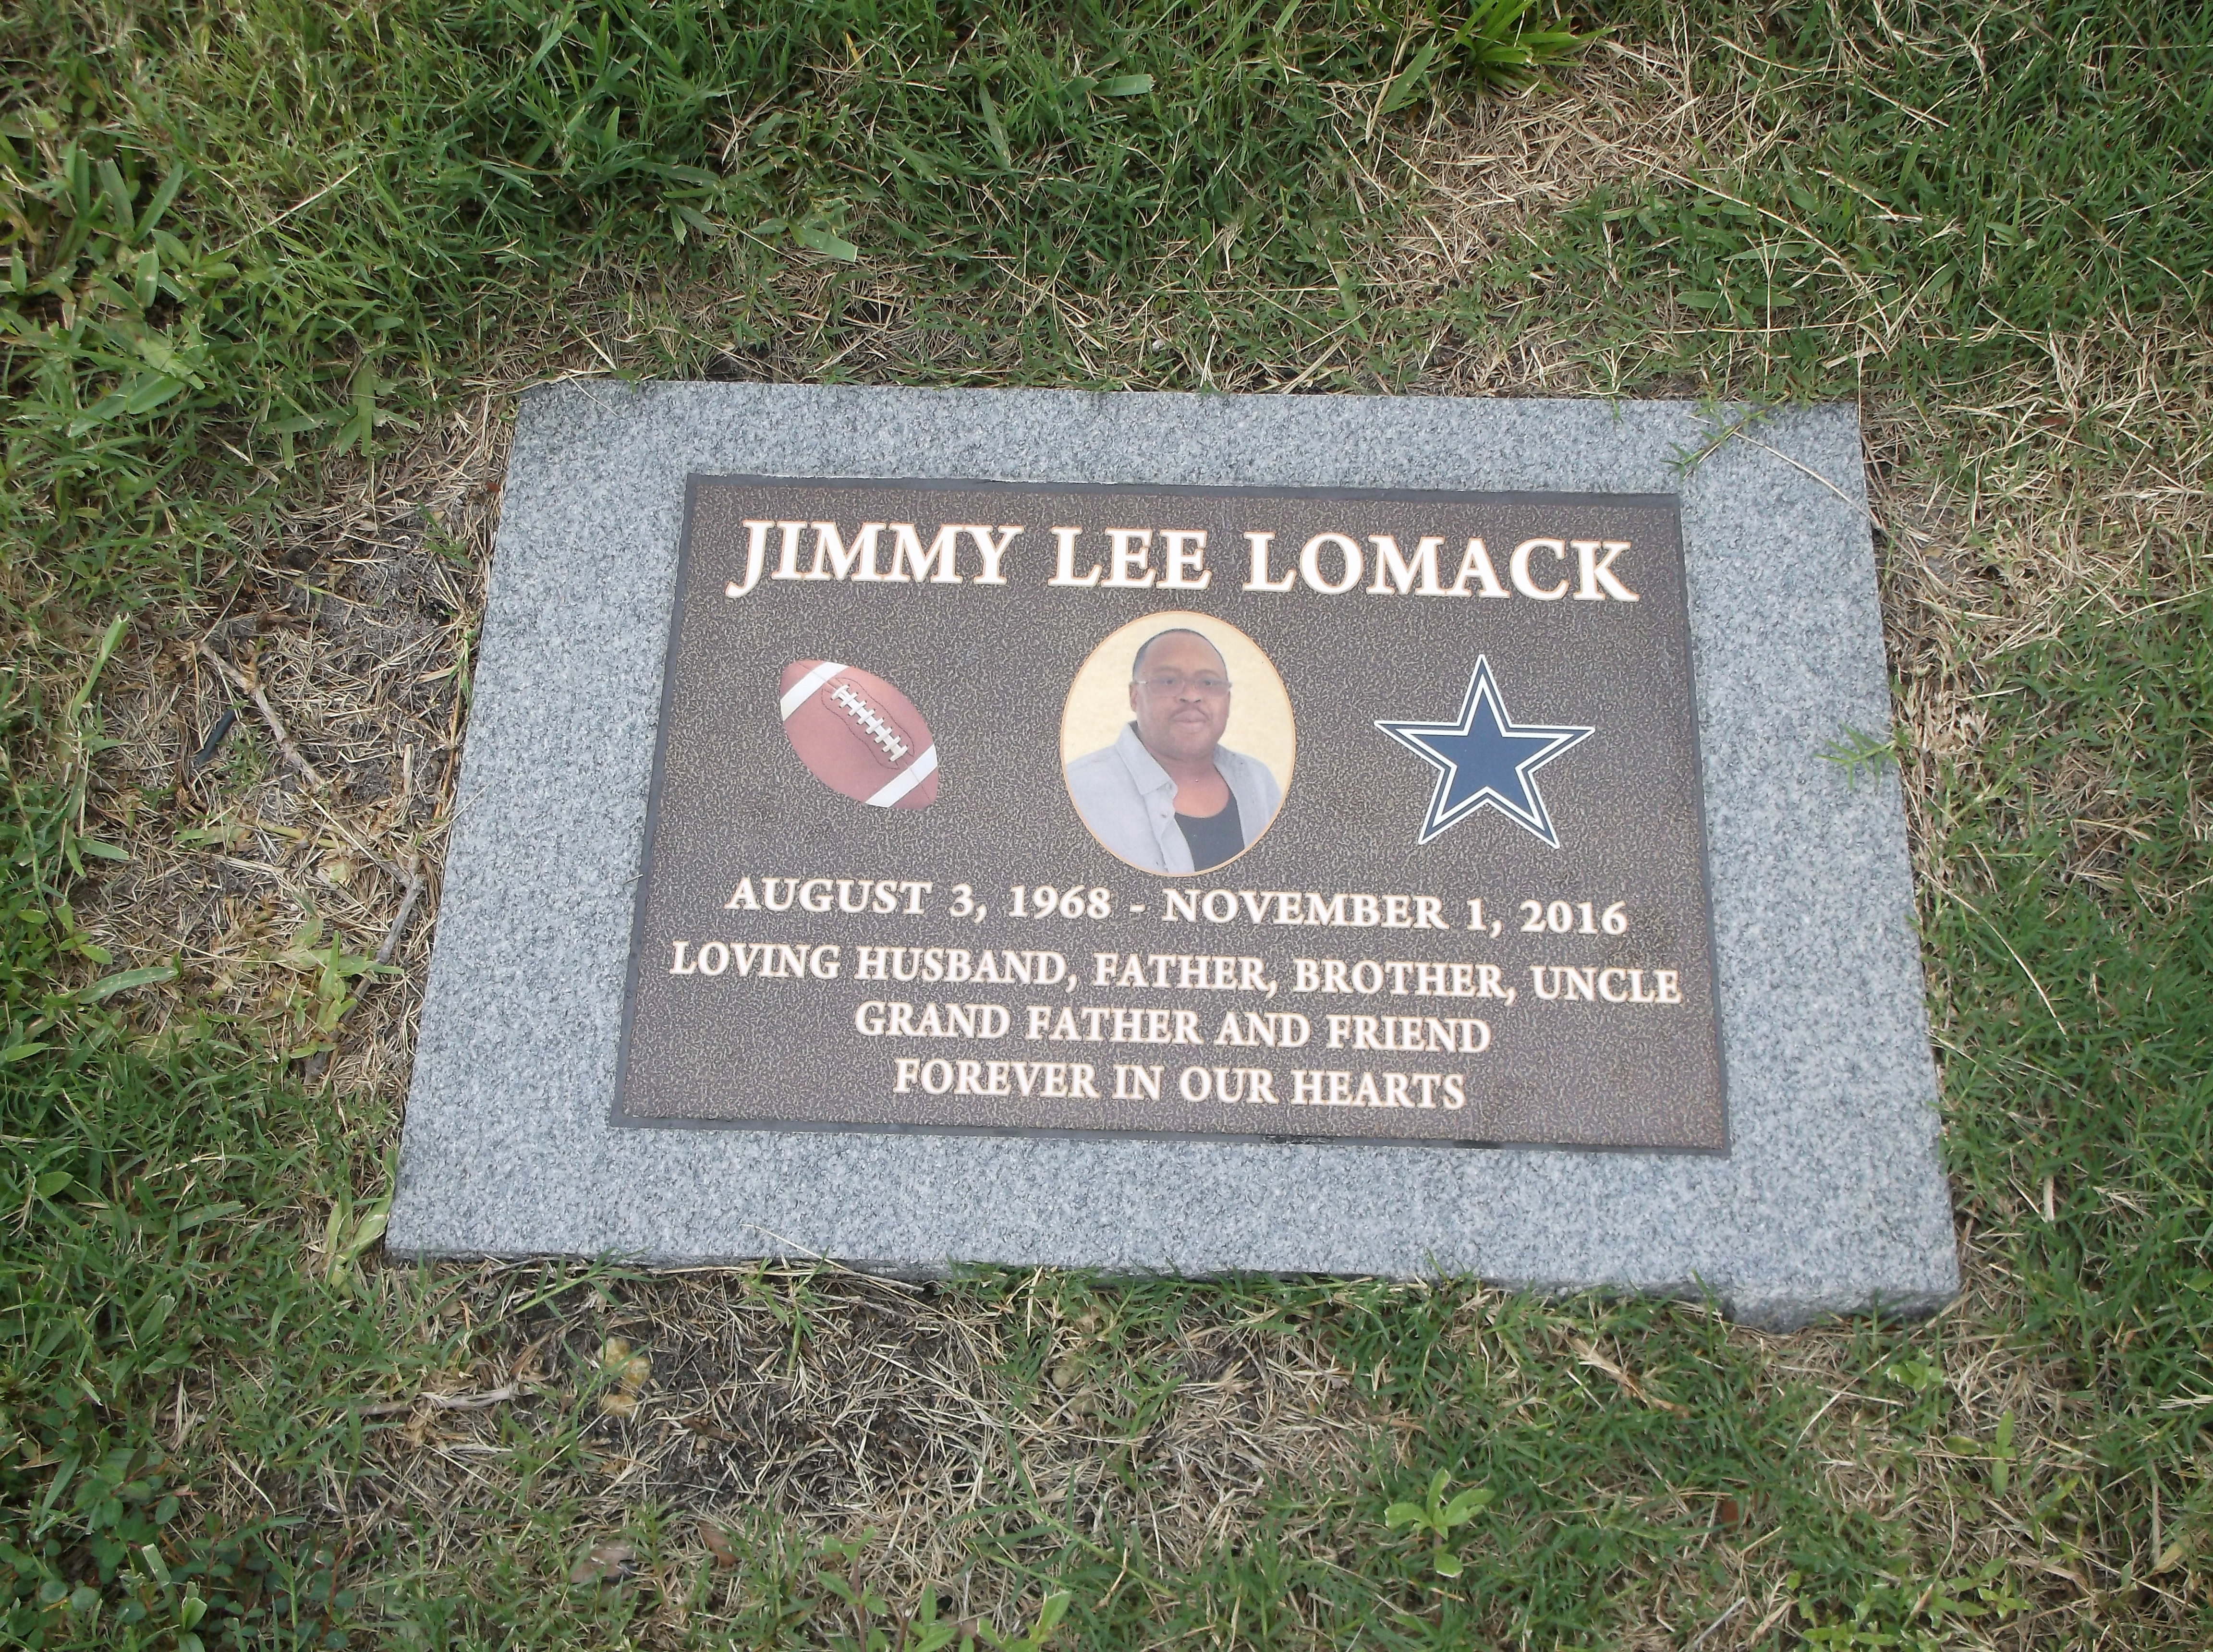 Jimmy Lee Lomack